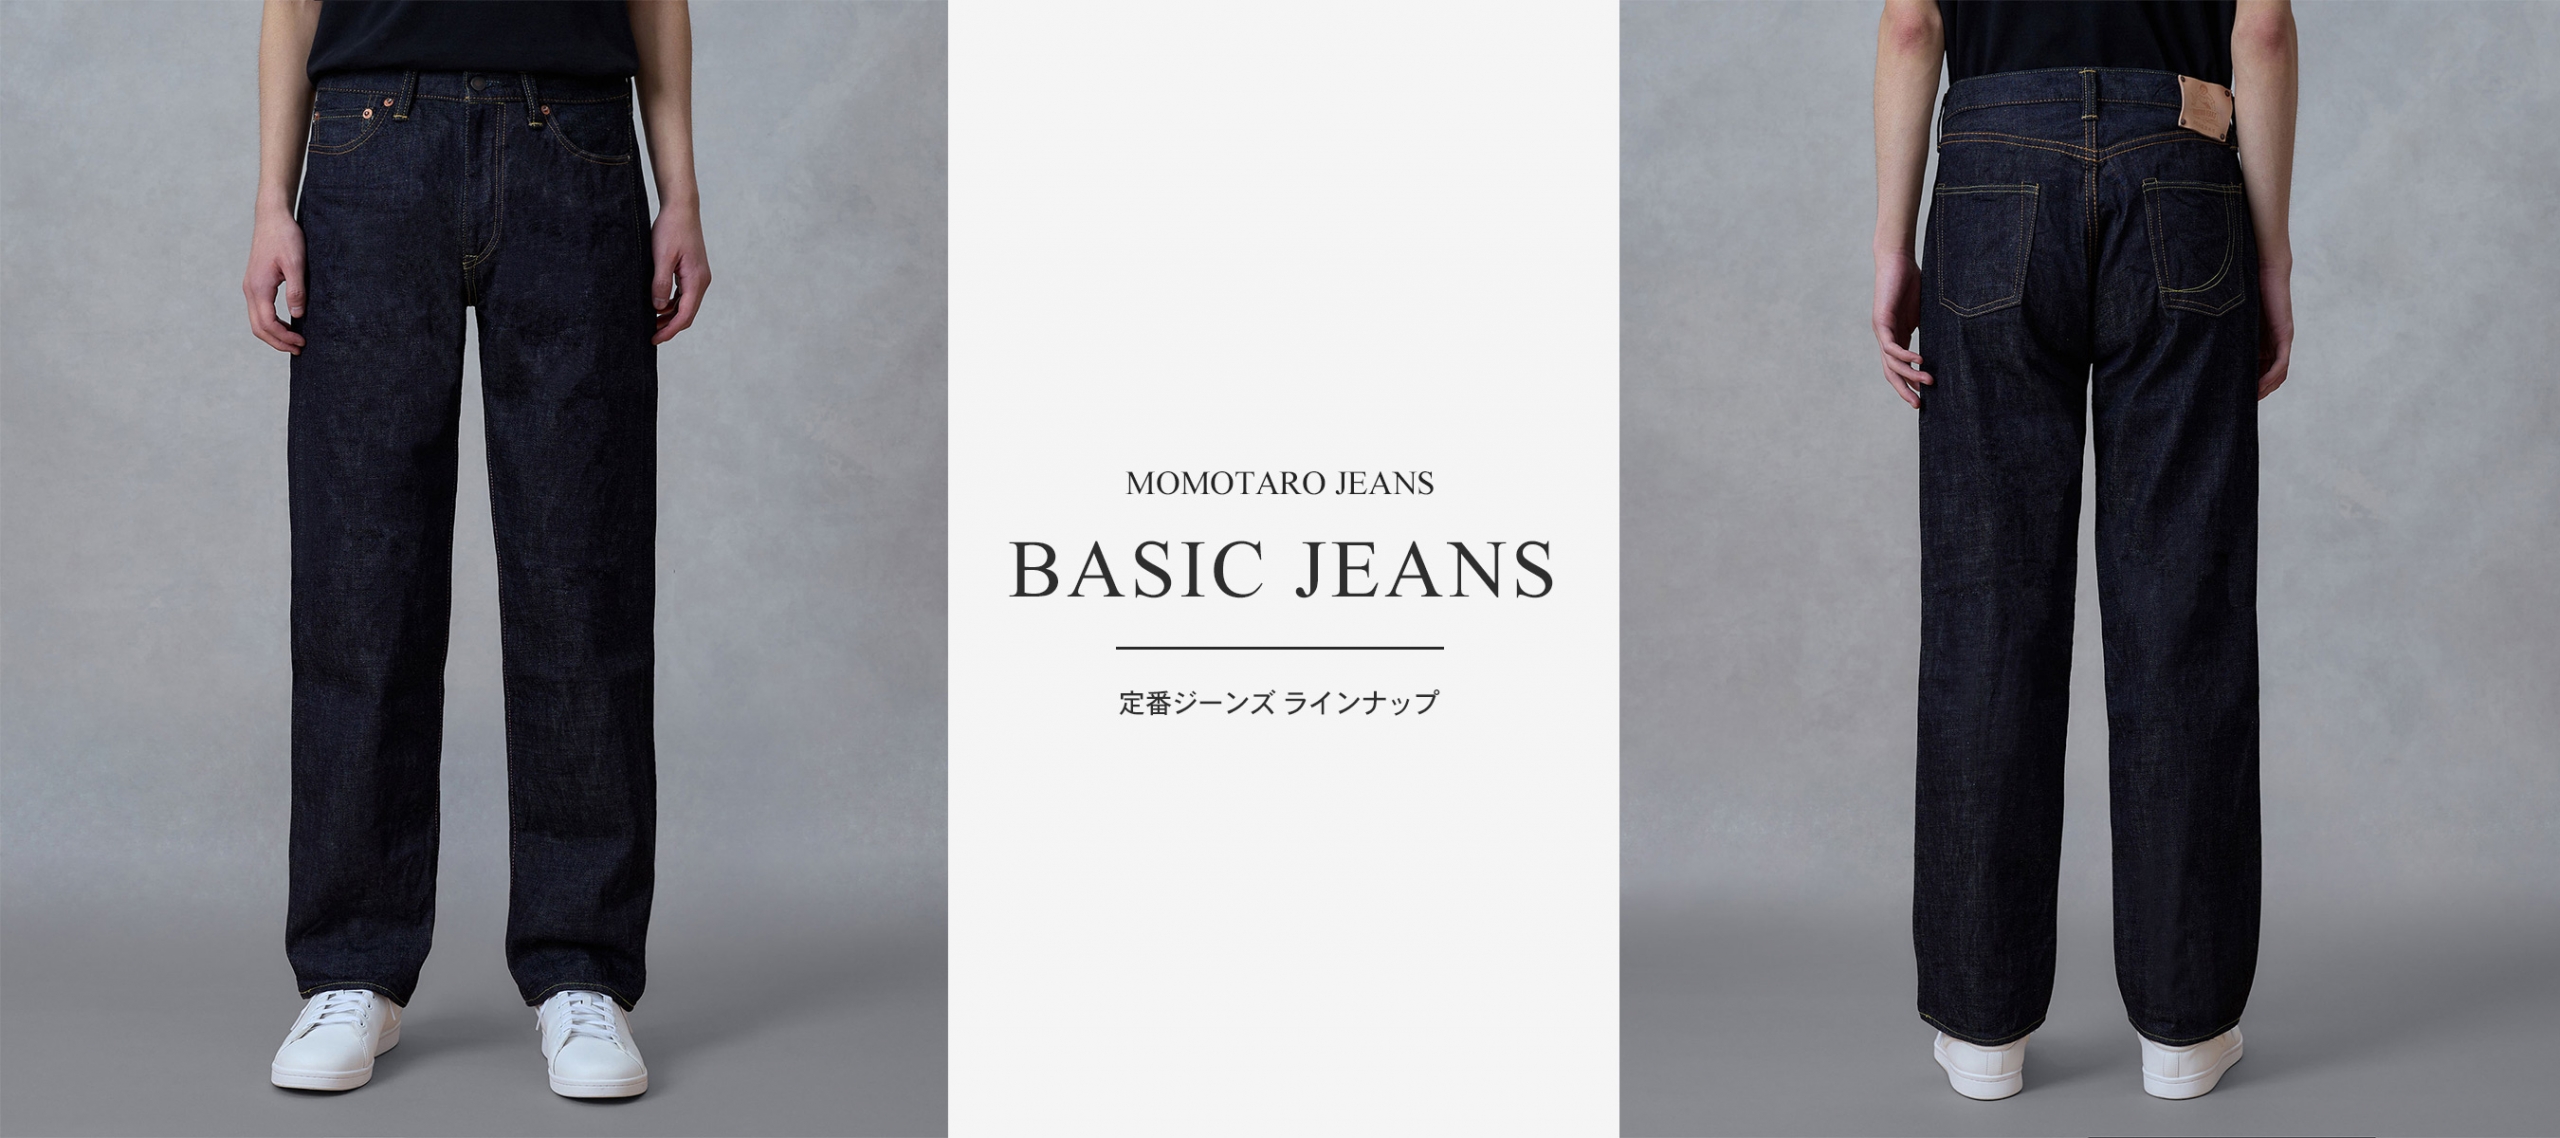 PC-mj-basic-jeans